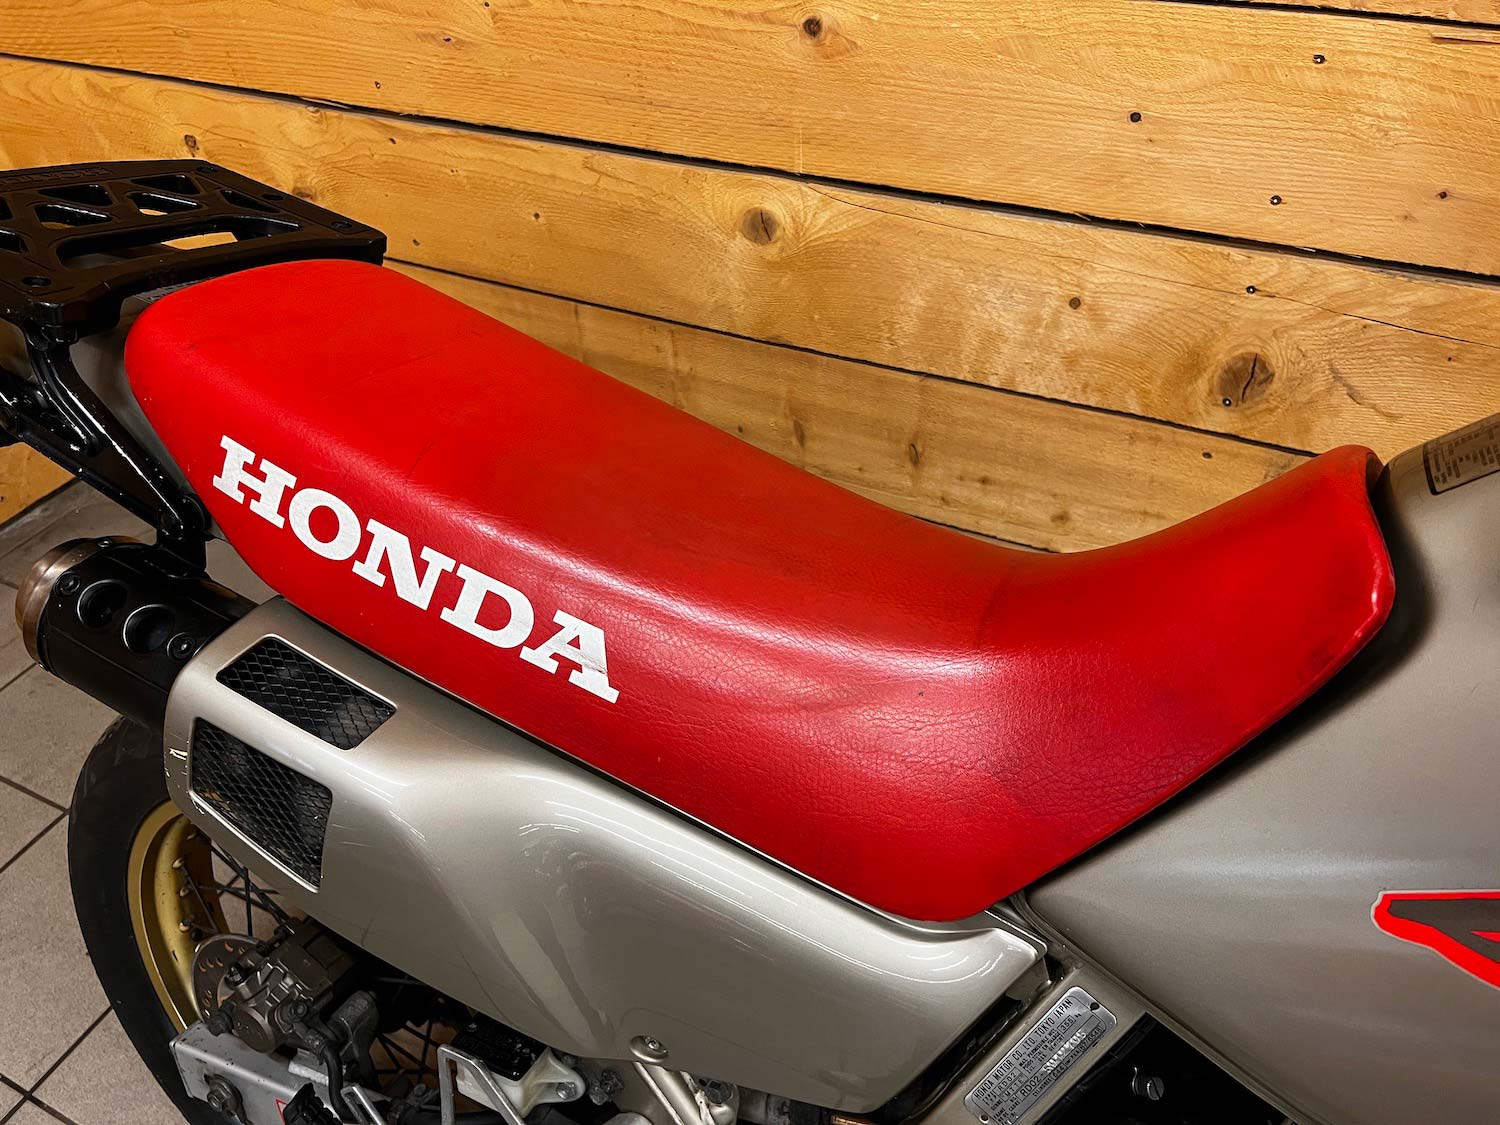 Honda_dominator_Cezanne_classic_Motorcycle_6-152.jpg